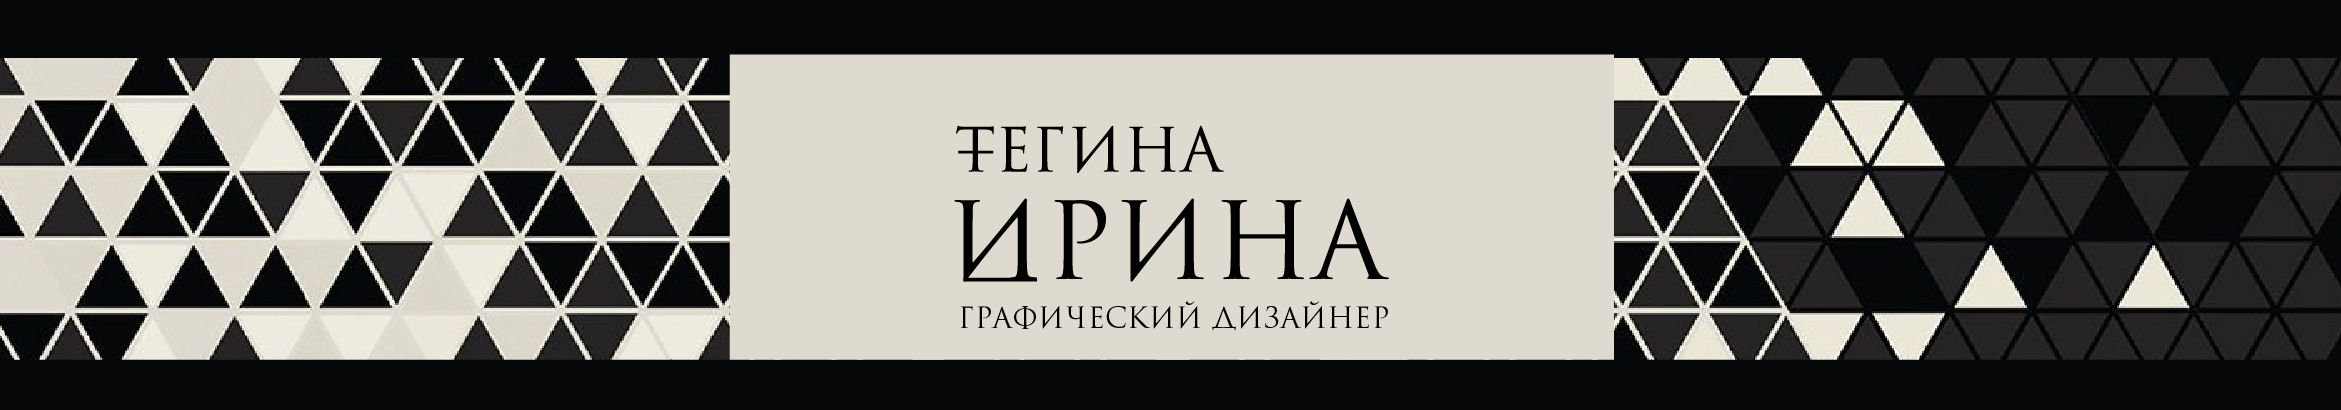 Ирина Тегина's profile banner